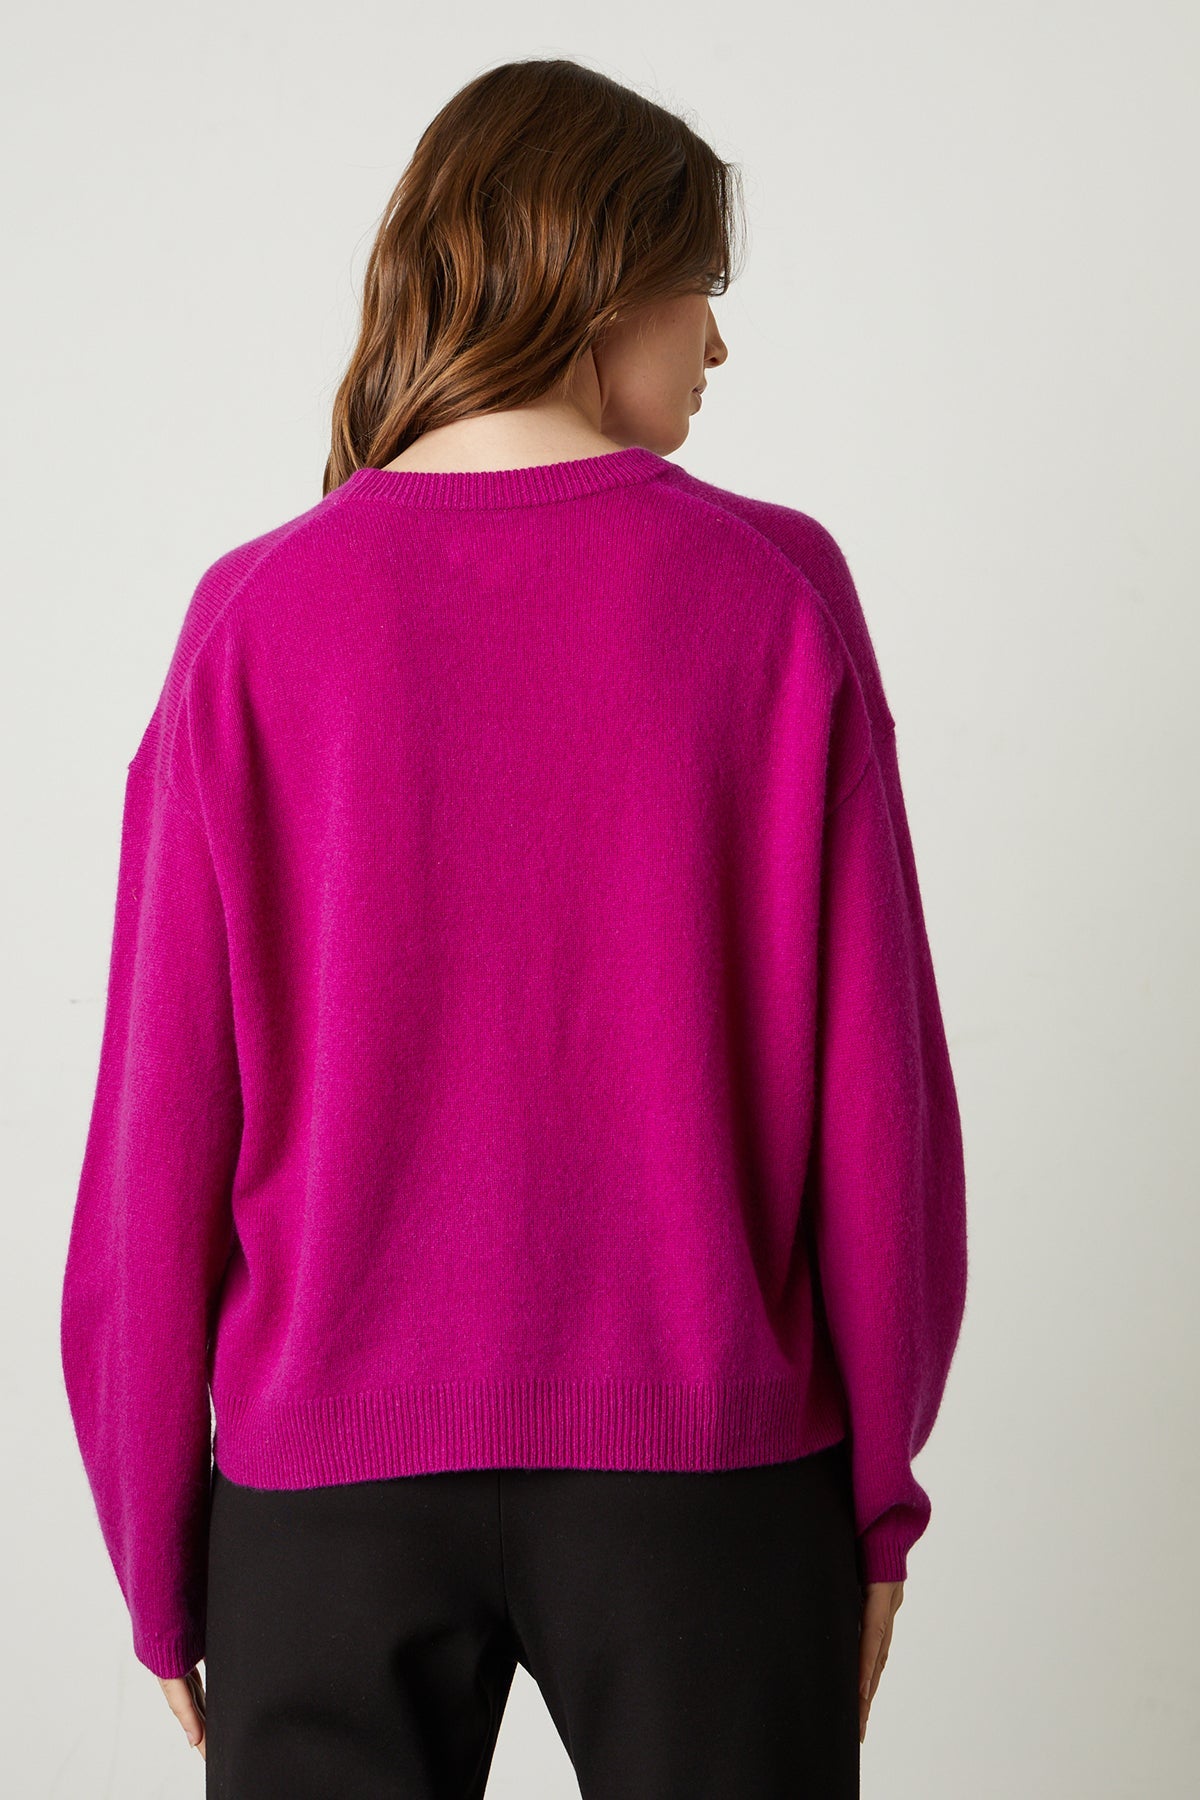   Brynne Cashmere Crew Neck Sweater in bright magenta pink back 